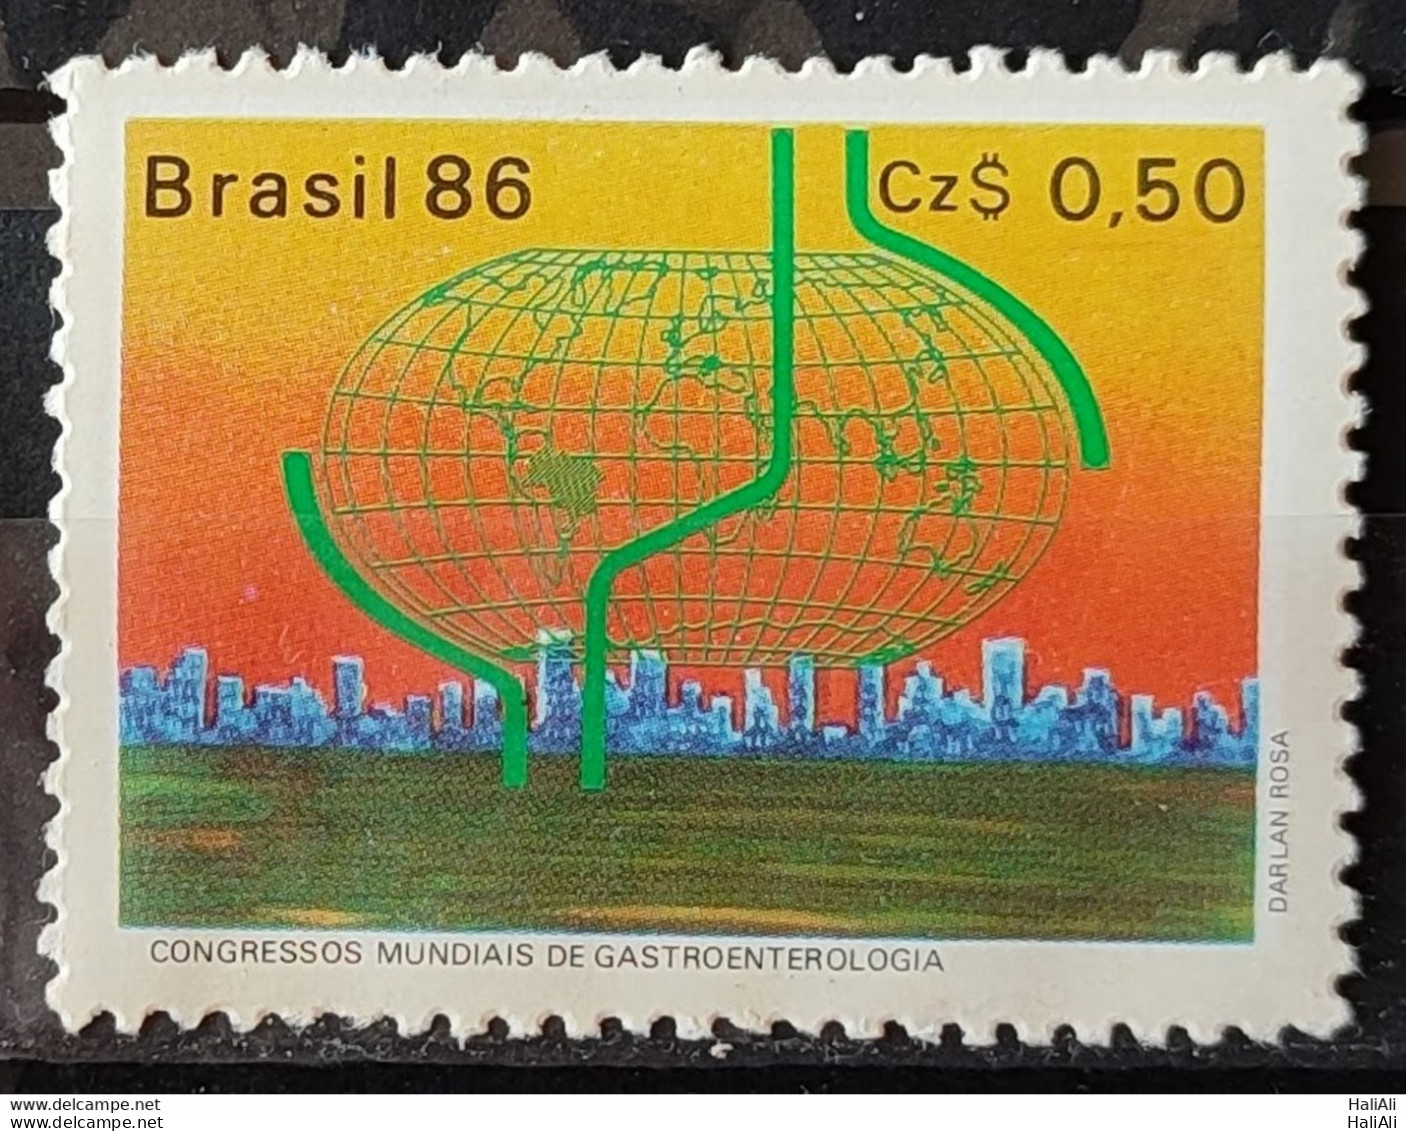 C 1520 Brazil Stamp Congress Of Gastroenterology Health 1986.jpg - Nuevos